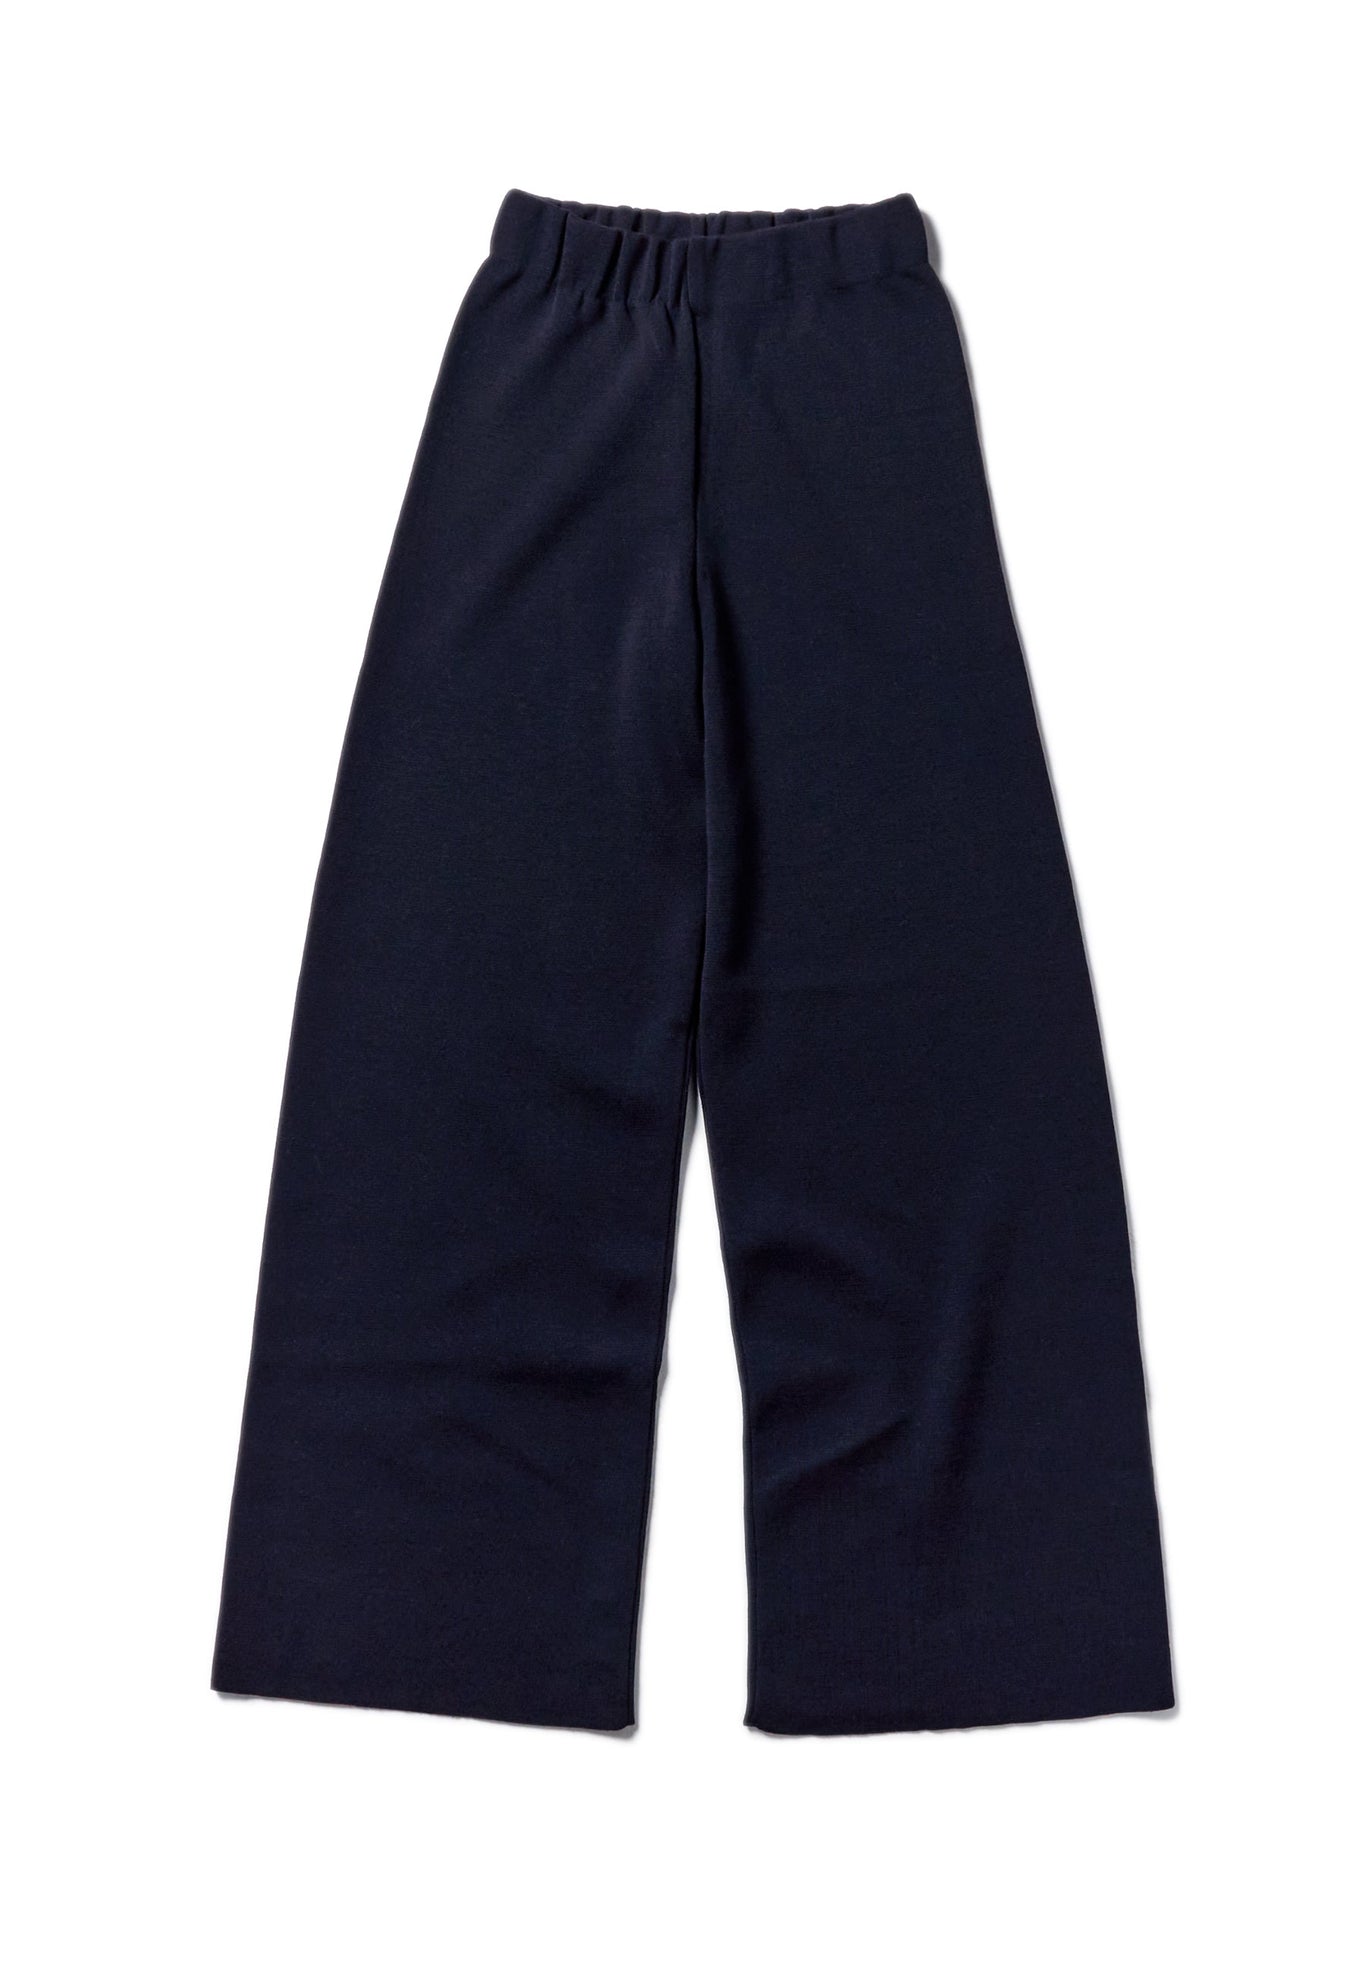 Rhea Navy Knit Pants